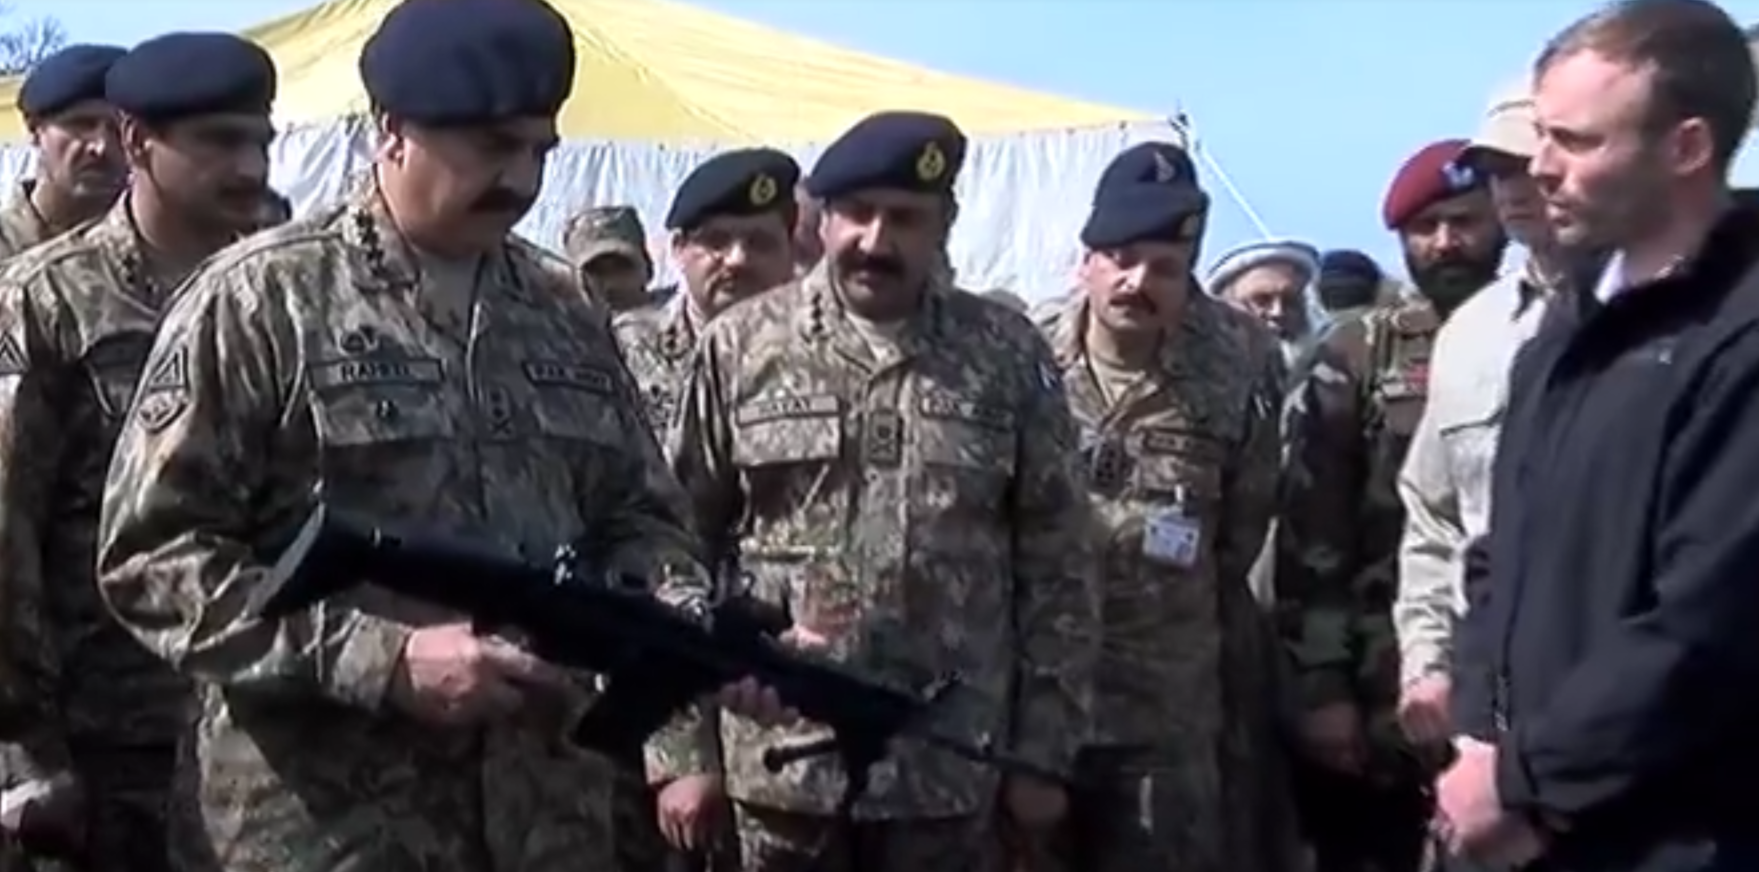 COAS Gen. Sharif holding a FN SCAR